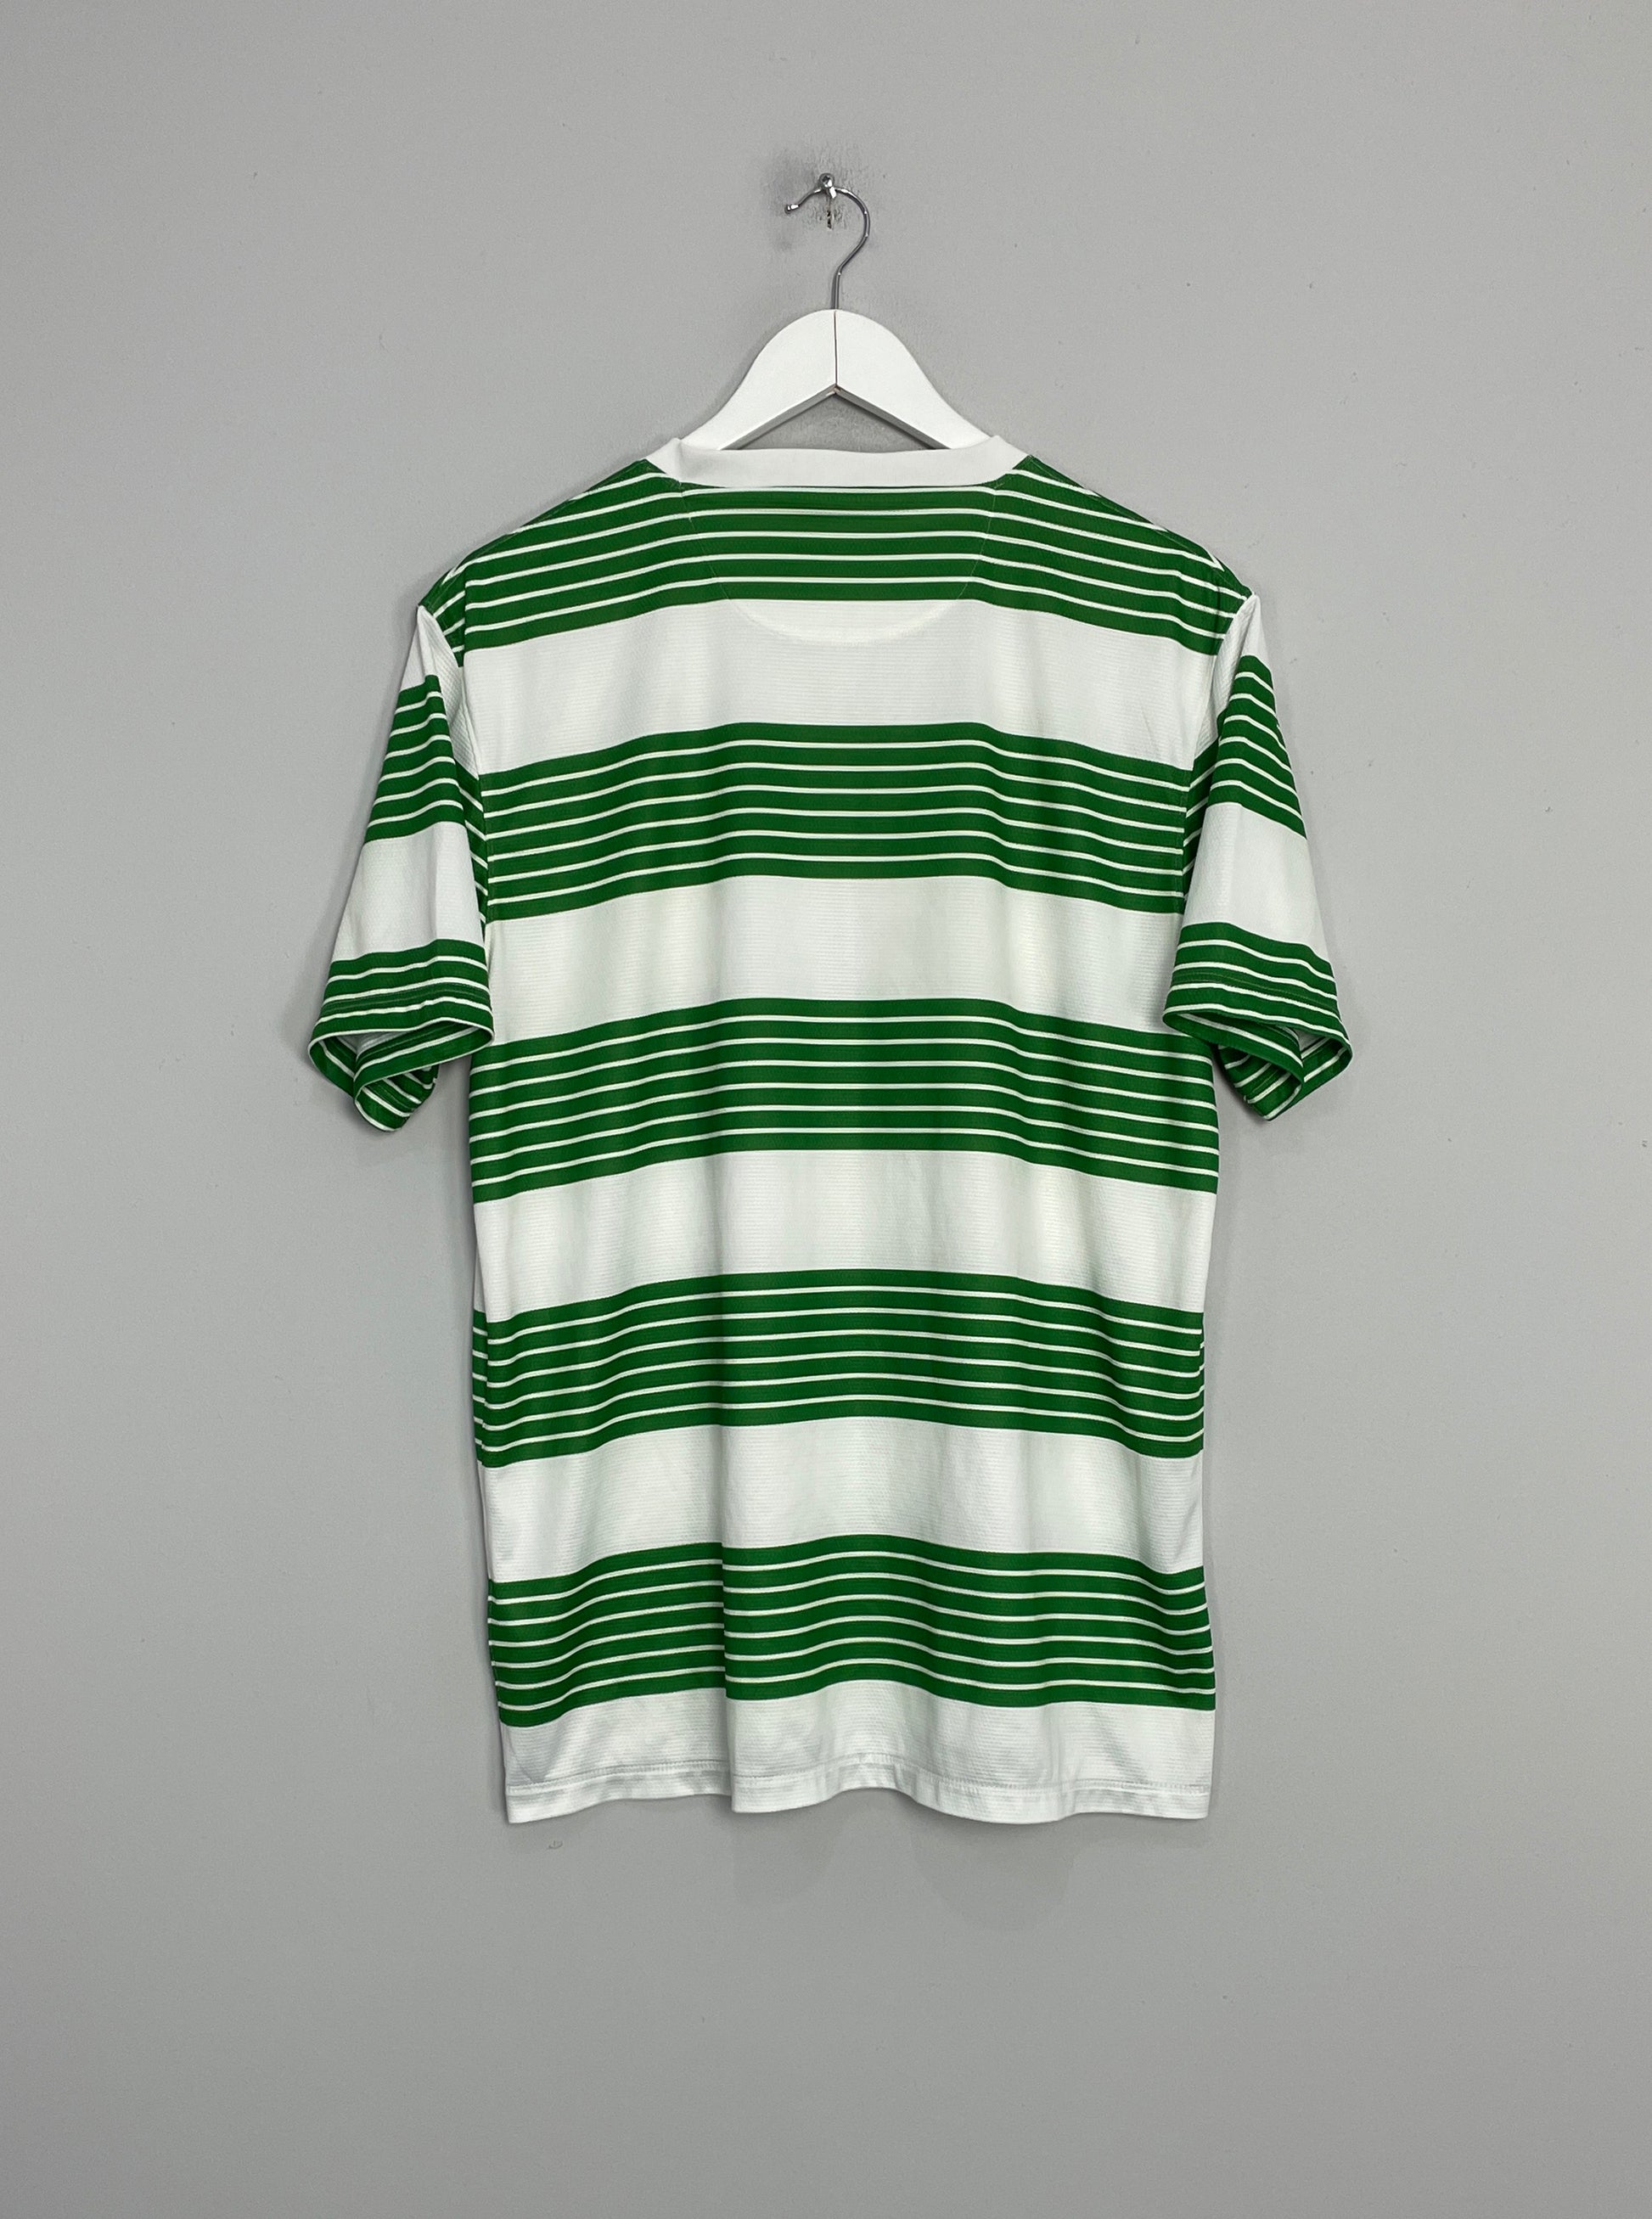 Official 2014-15 Celtic Third Nike Football Shirt: Buy Online on Offer